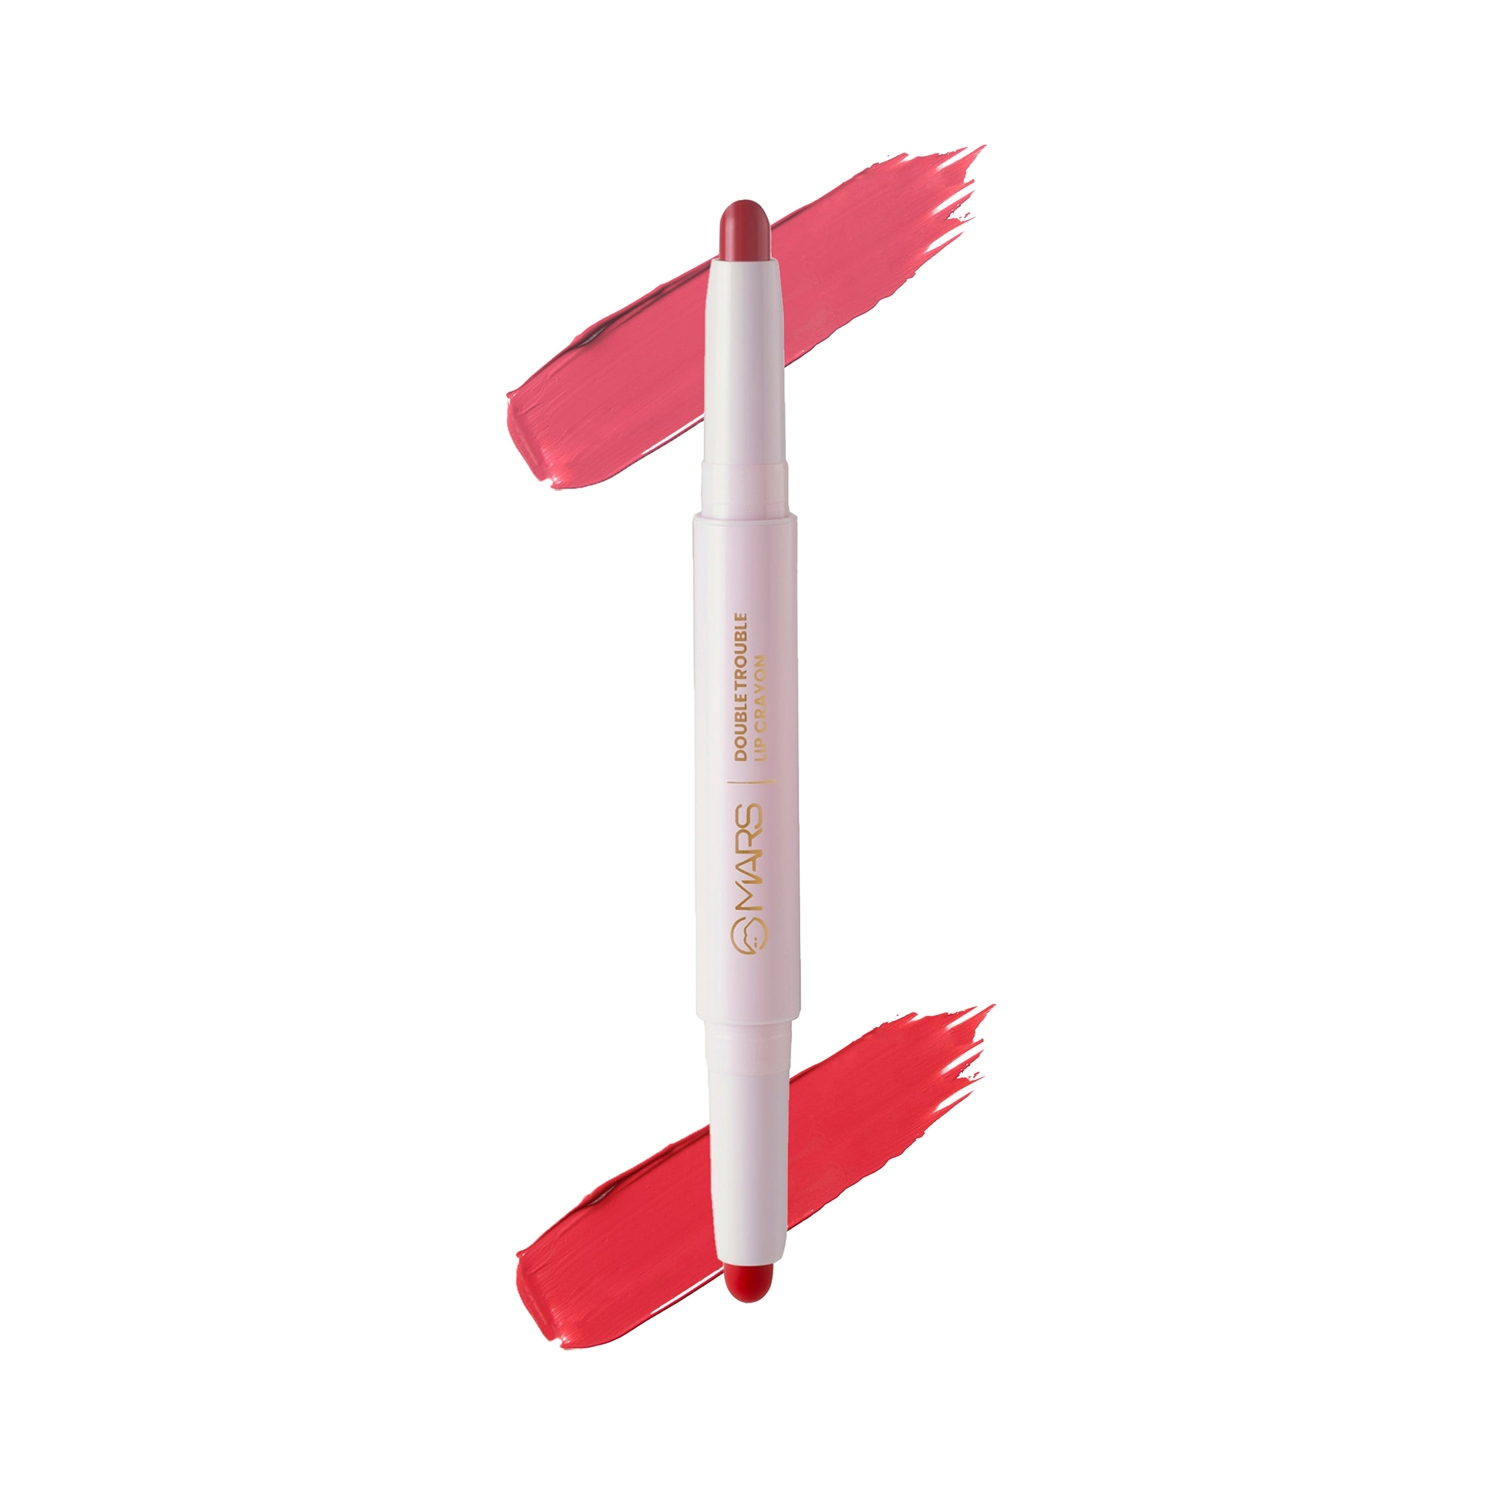 MARS Double Trouble Lip Crayon - 01 Flamingo Ferrari (4g)